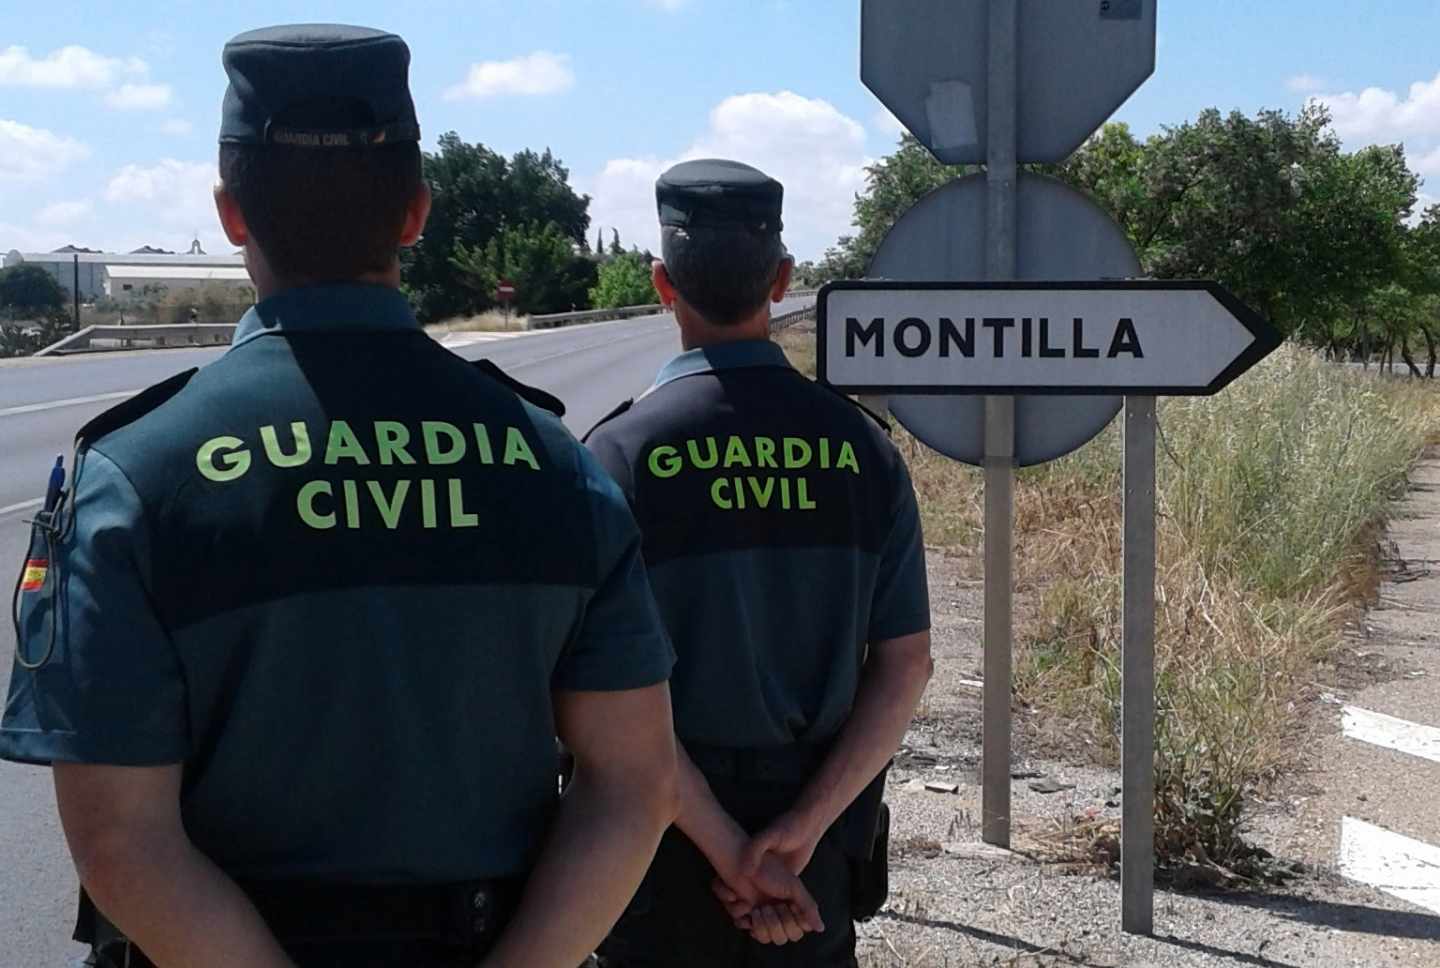 Marlaska 'bendice' la orden que prohíbe bigotes largos y tatuajes visibles en la Guardia Civil